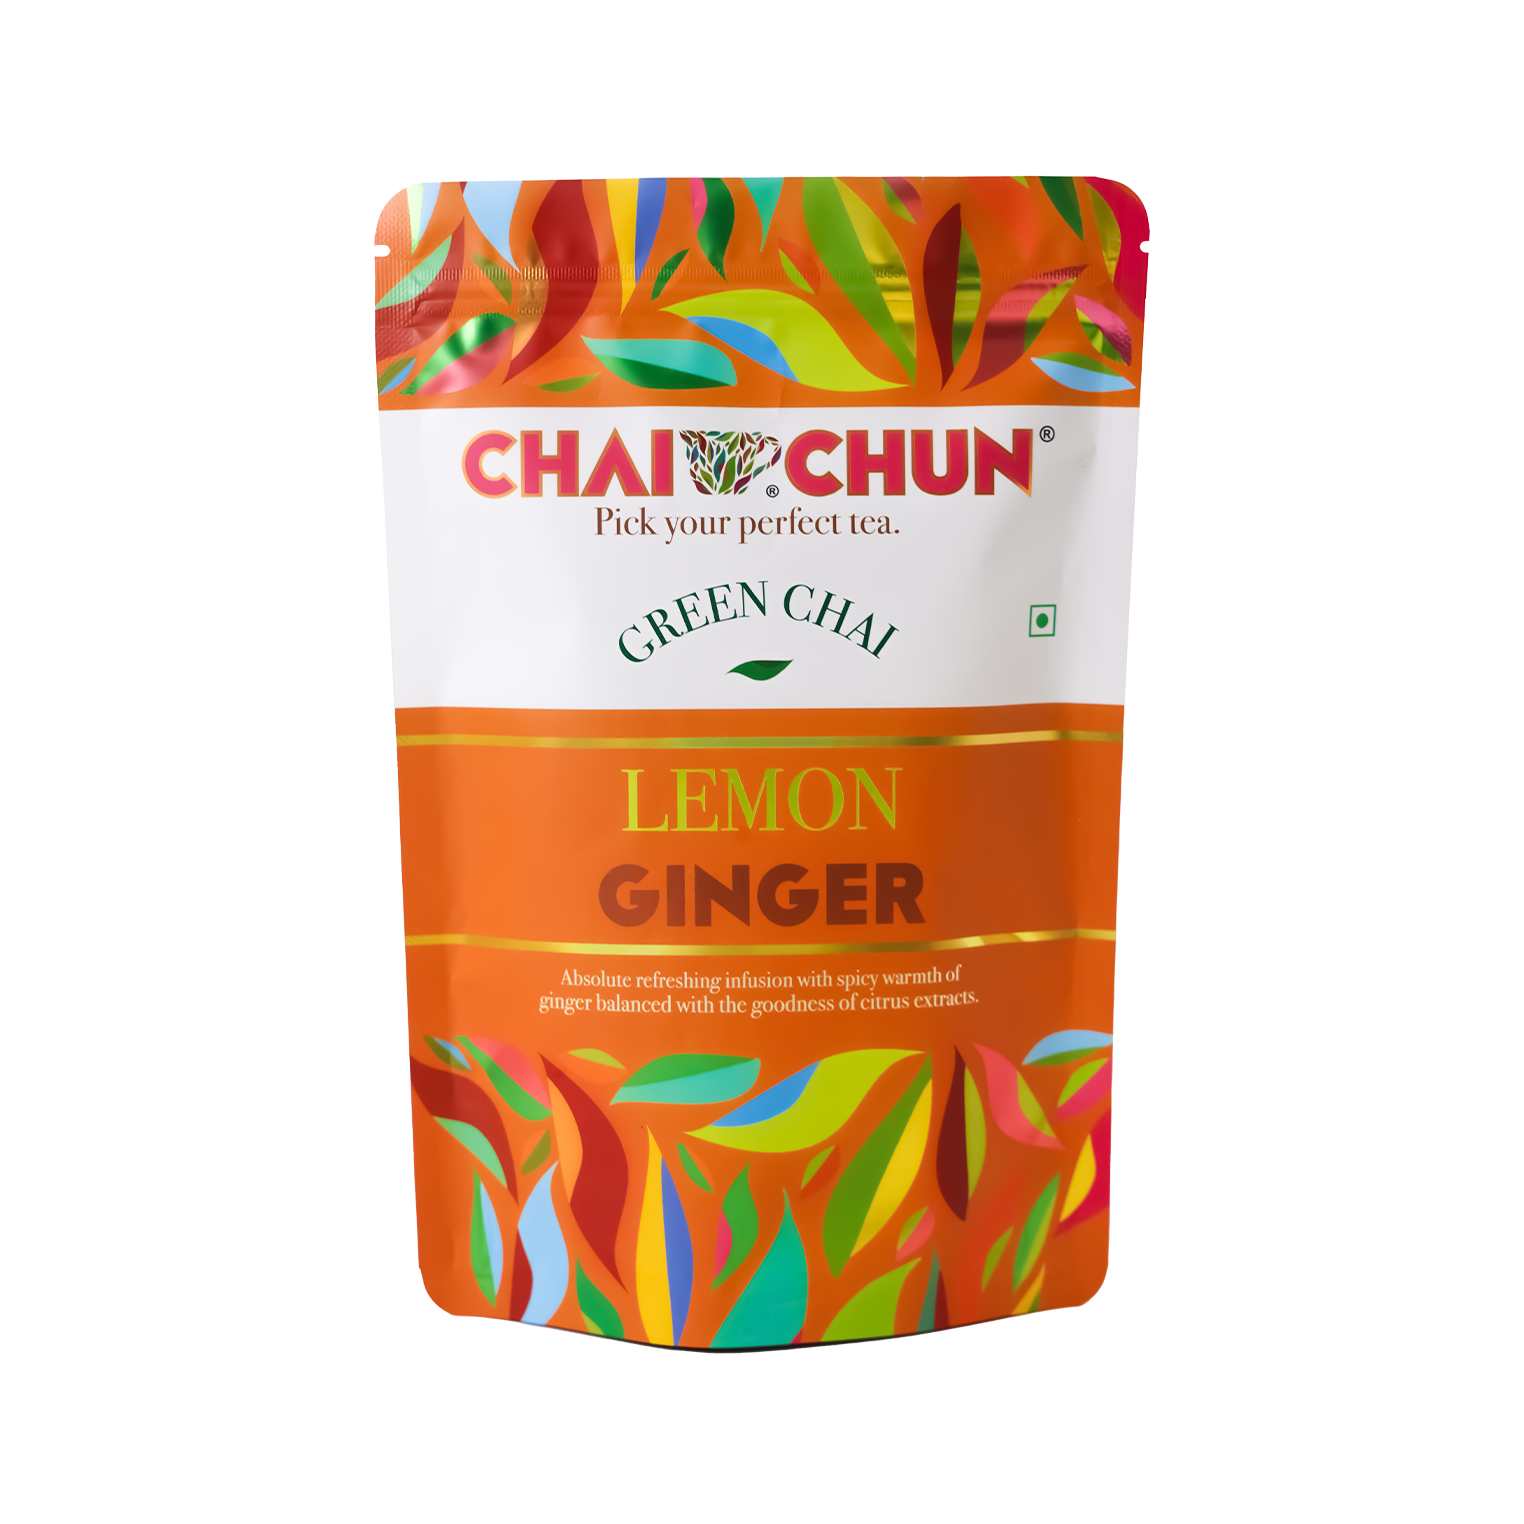 Lemon Ginger - Chai Chun